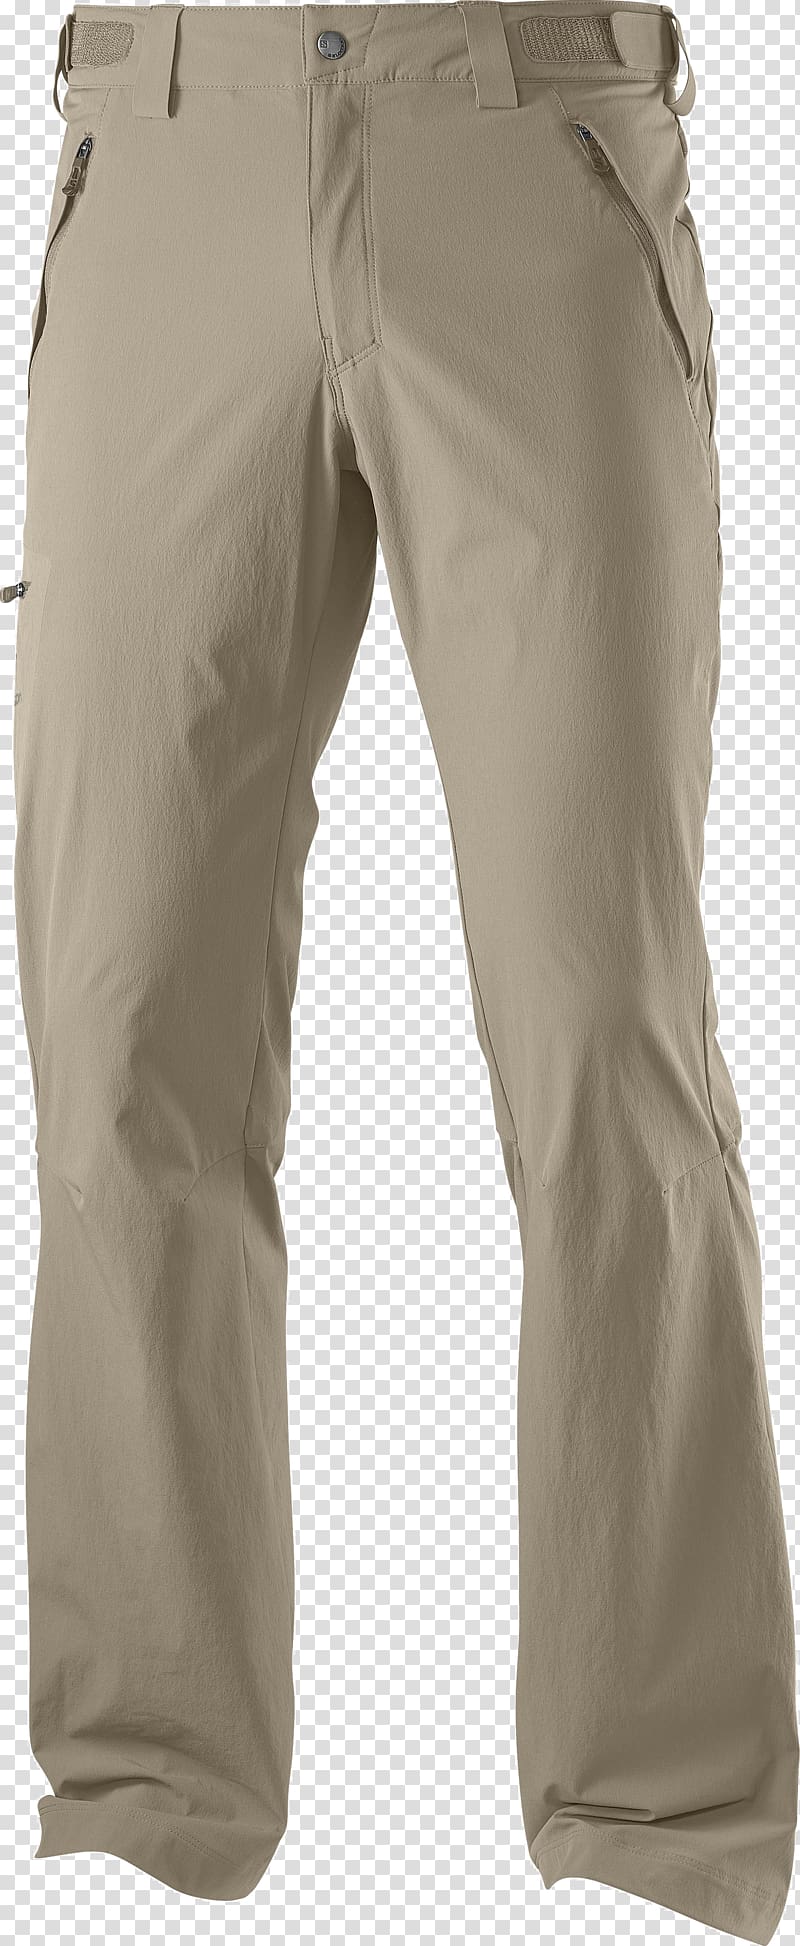 Pants Clothing Accessories Zipp-Off-Hose Shoe, boot transparent background PNG clipart